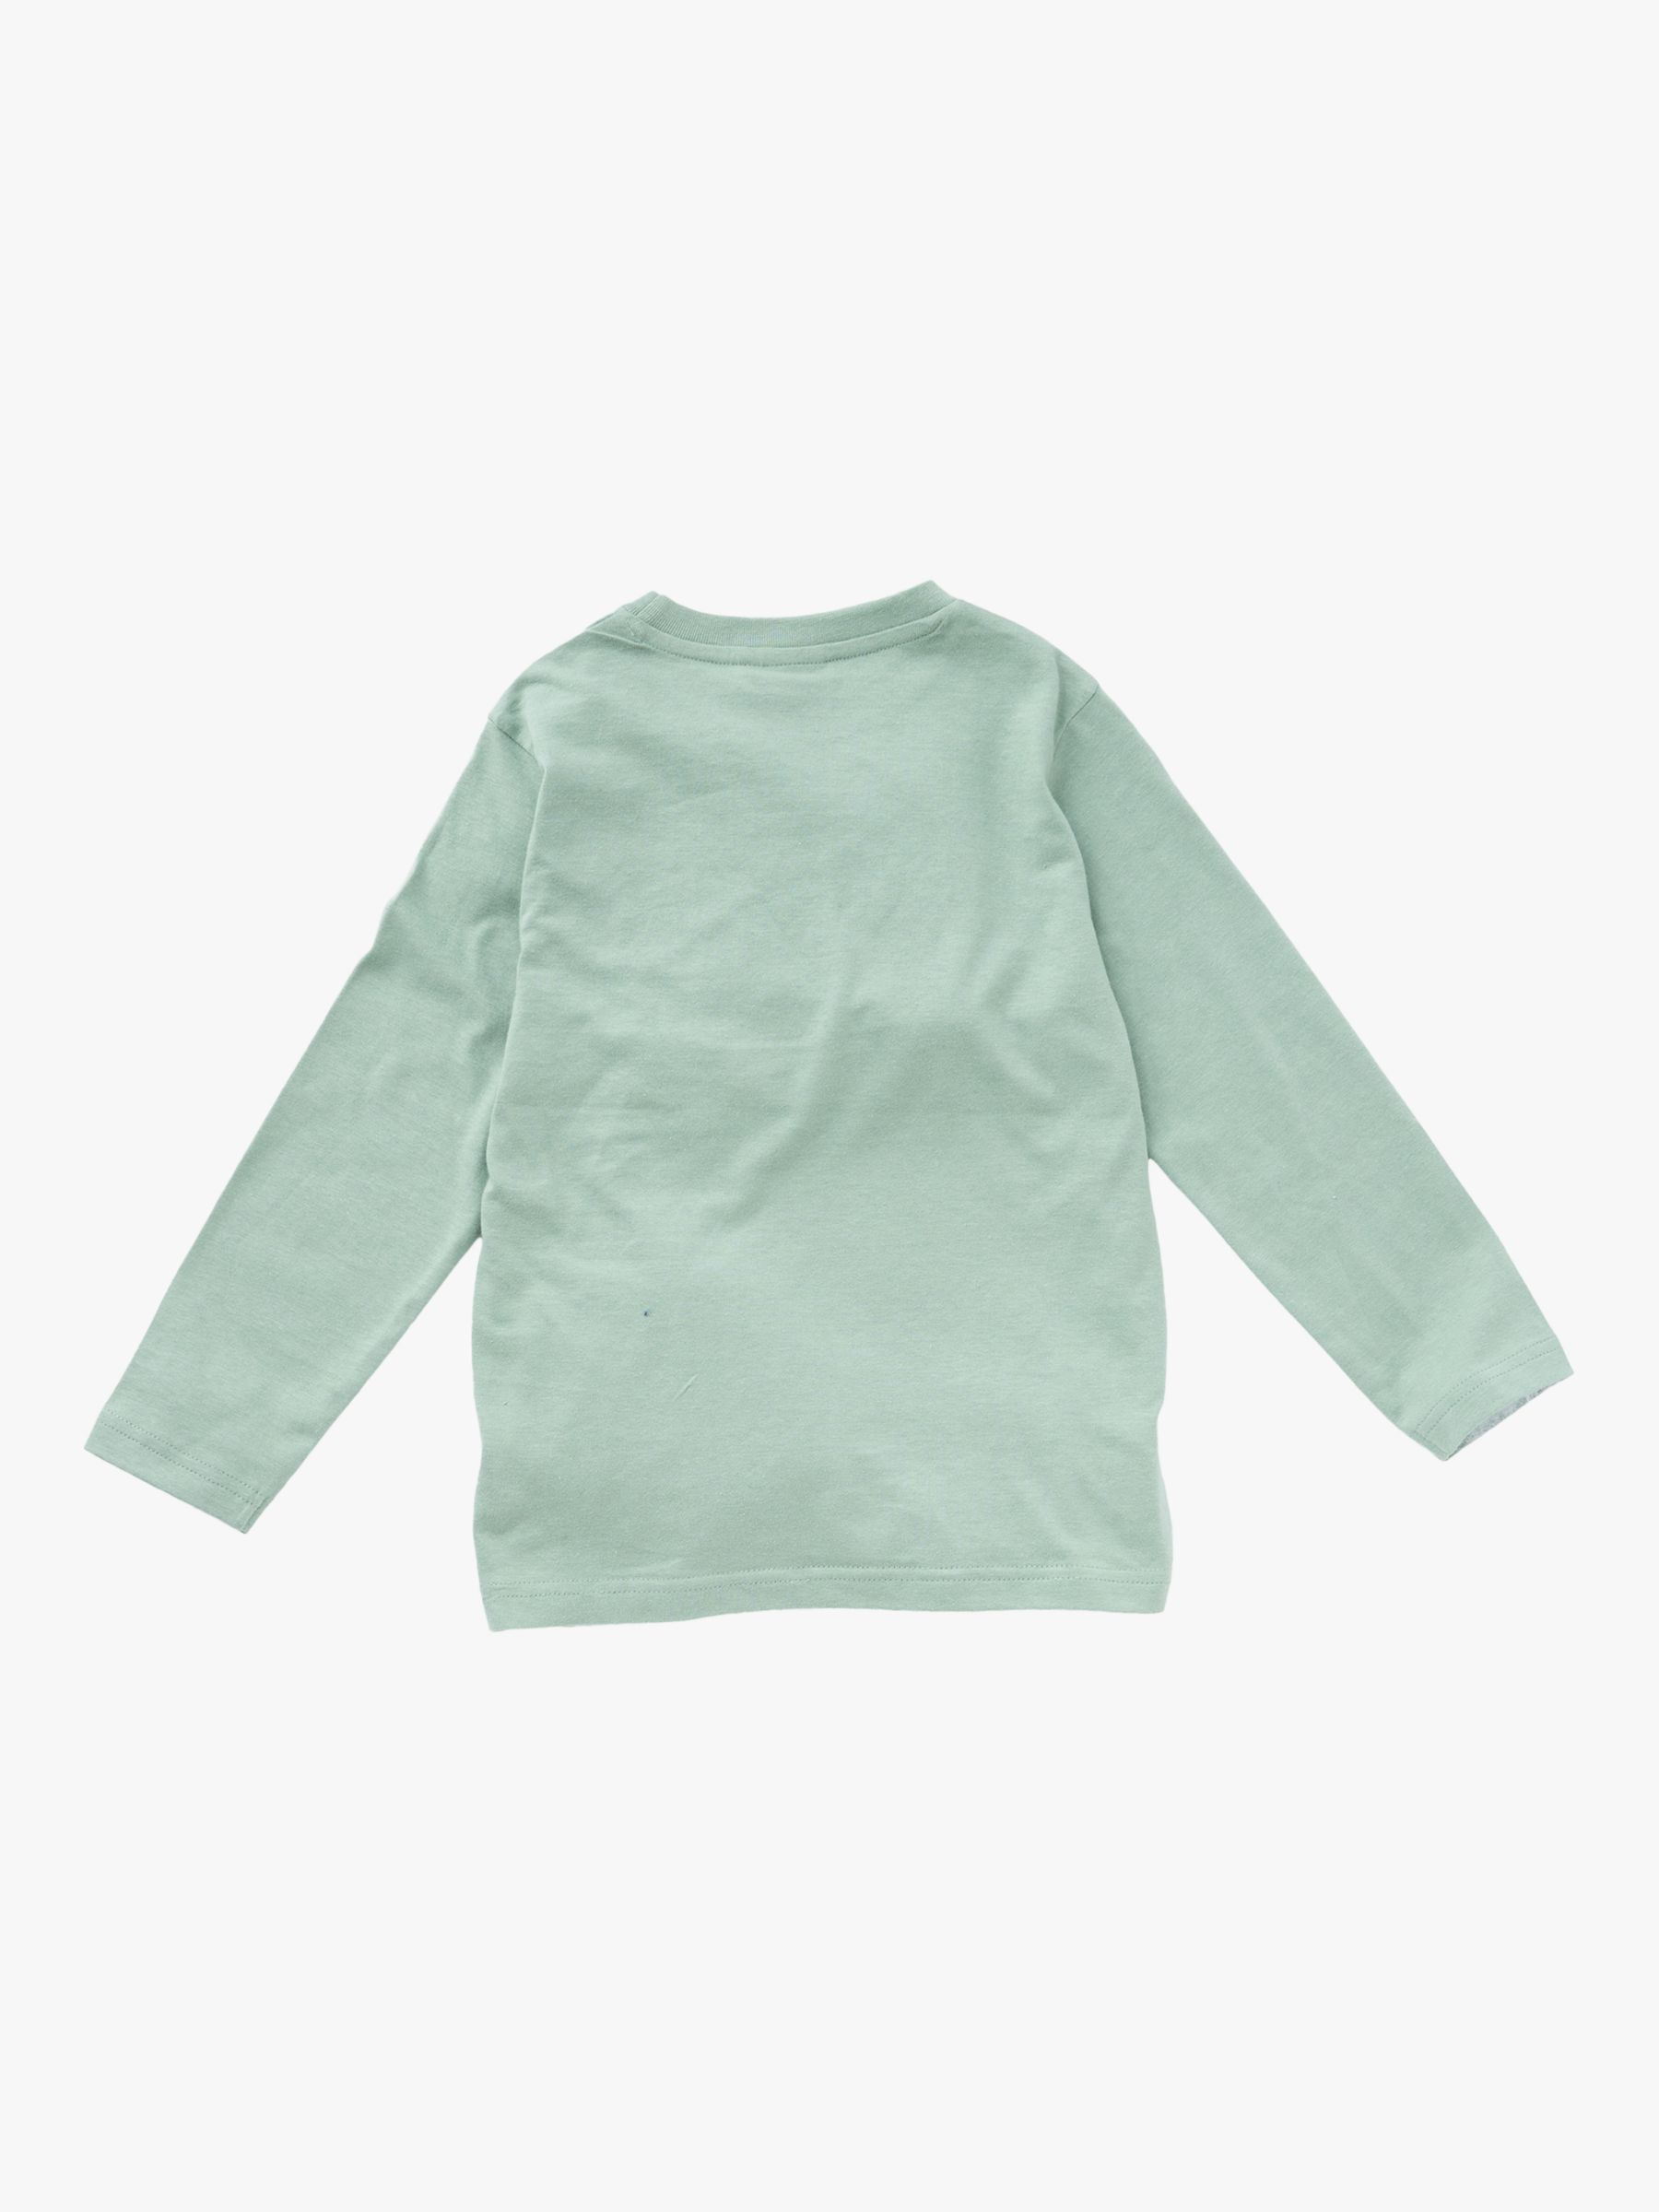 Buy Angel & Rocket Kids' Marvel Long Sleeve T-Shirt, Green Online at johnlewis.com